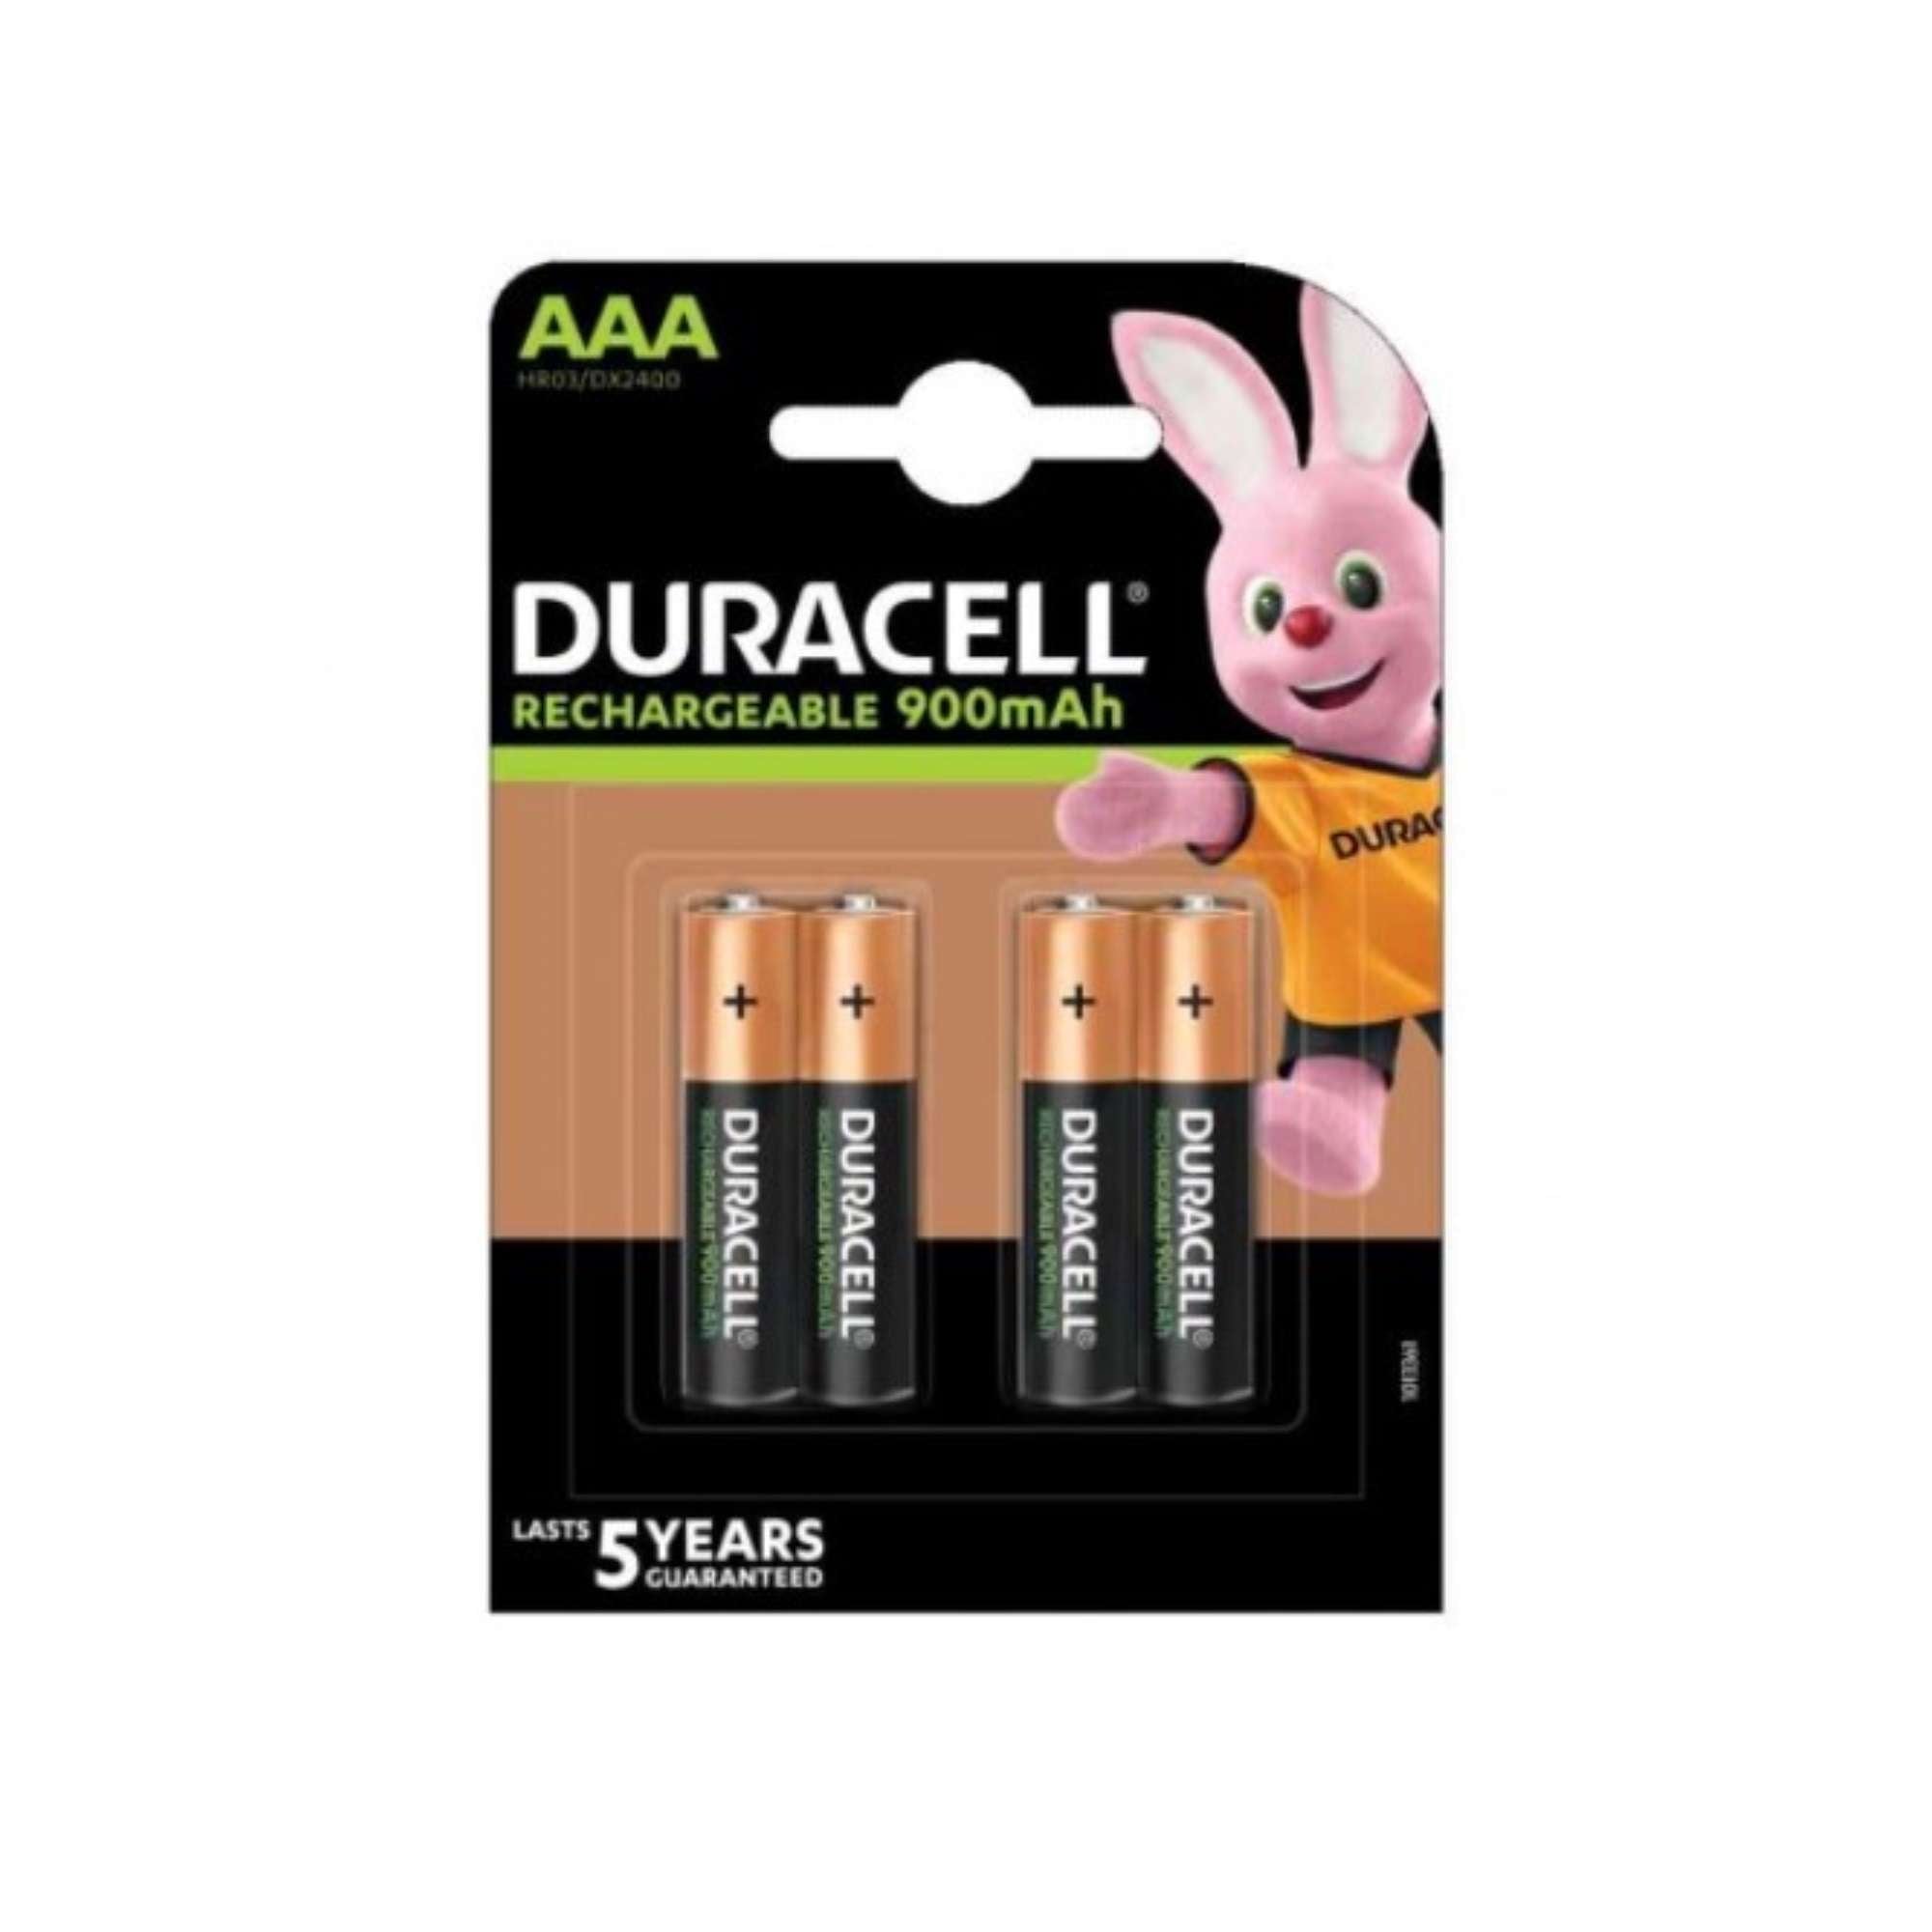 Batterie ministilo ricaricabili, blister con 4 pile - DURACELL AAA 4